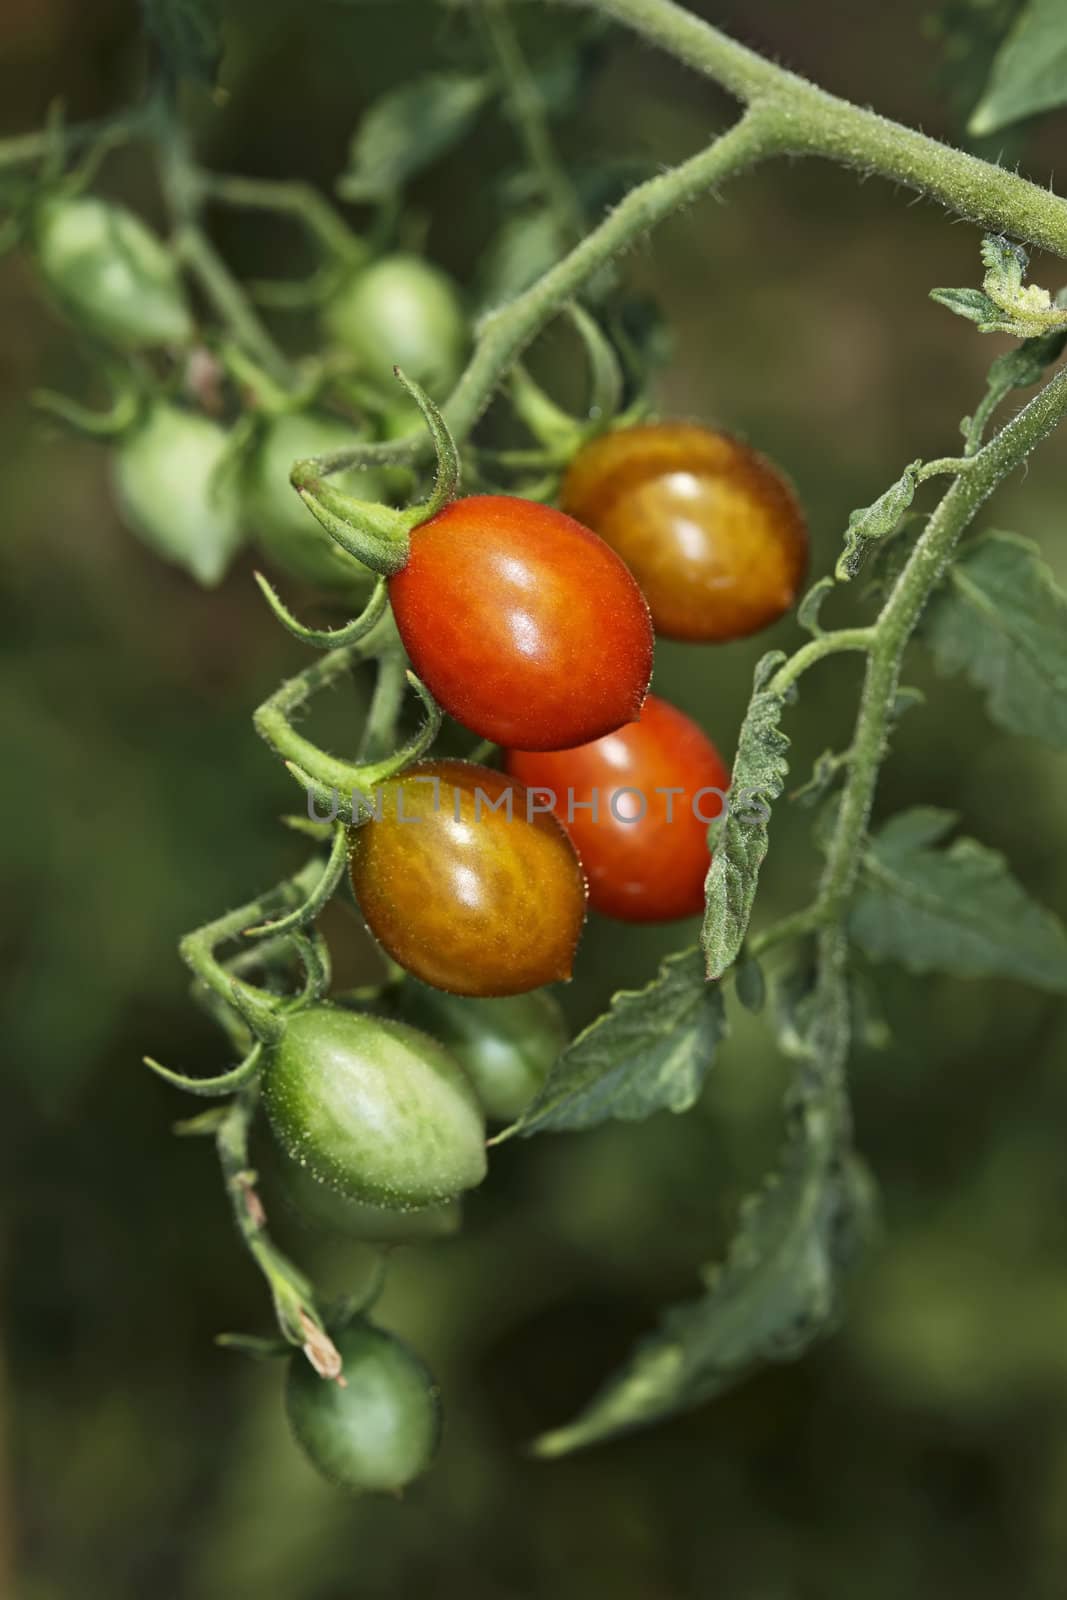 ITALY, countryside, italian small tomatoes  by agiampiccolo